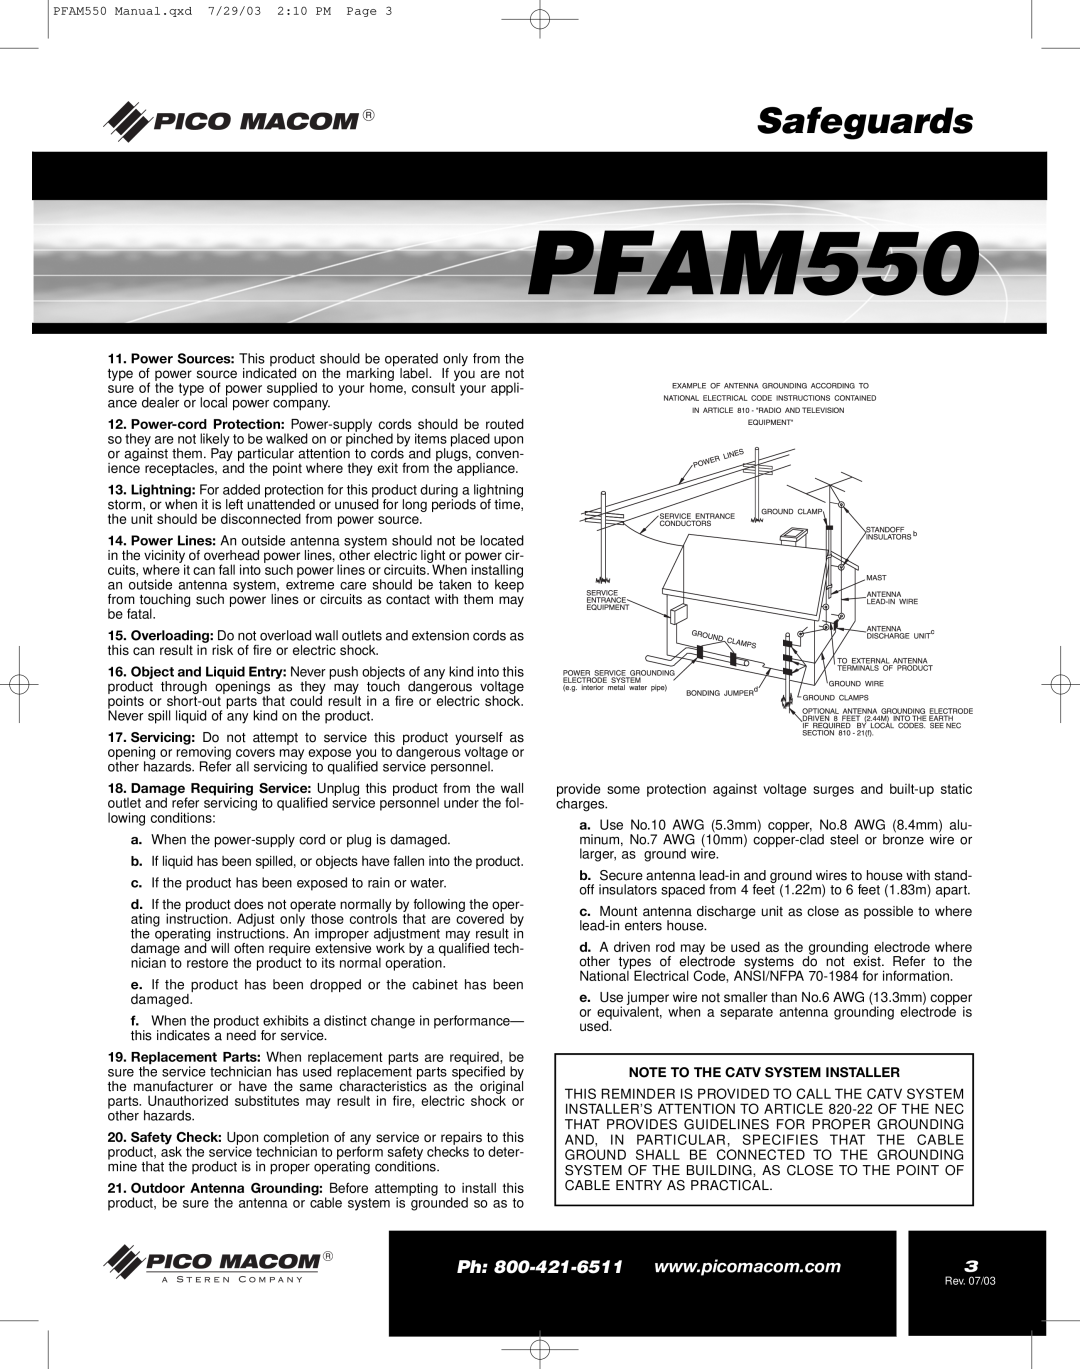 Pico Macom PFAM550 operation manual Safeguards, Note To The Catv System Installer 